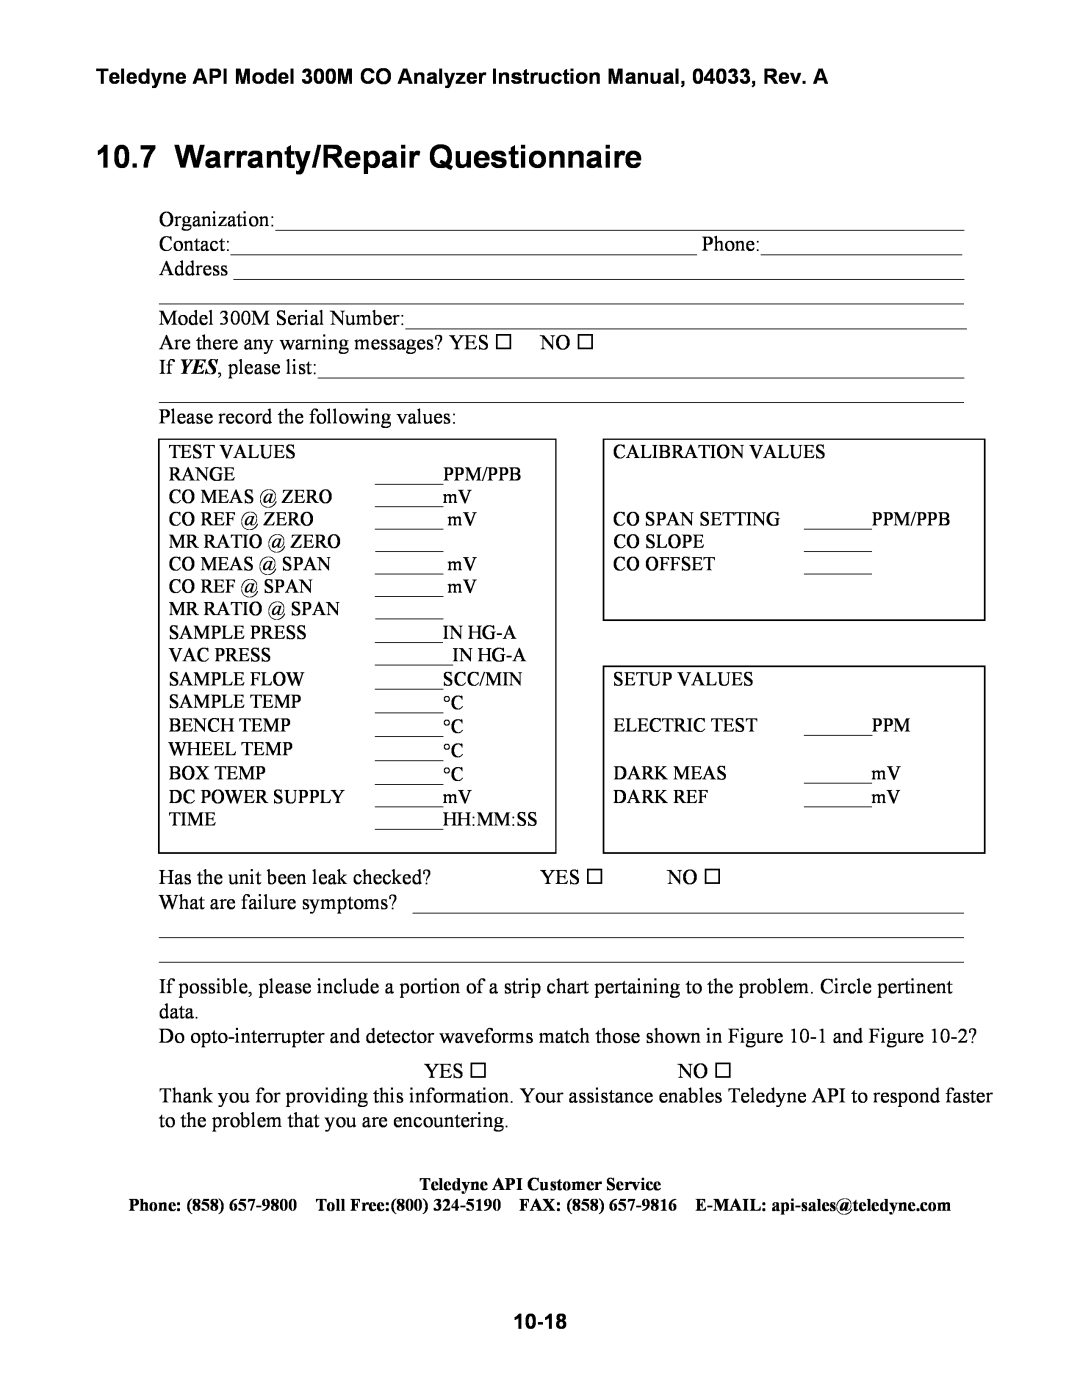 Teledyne 300M instruction manual Warranty/Repair Questionnaire, 10-18 